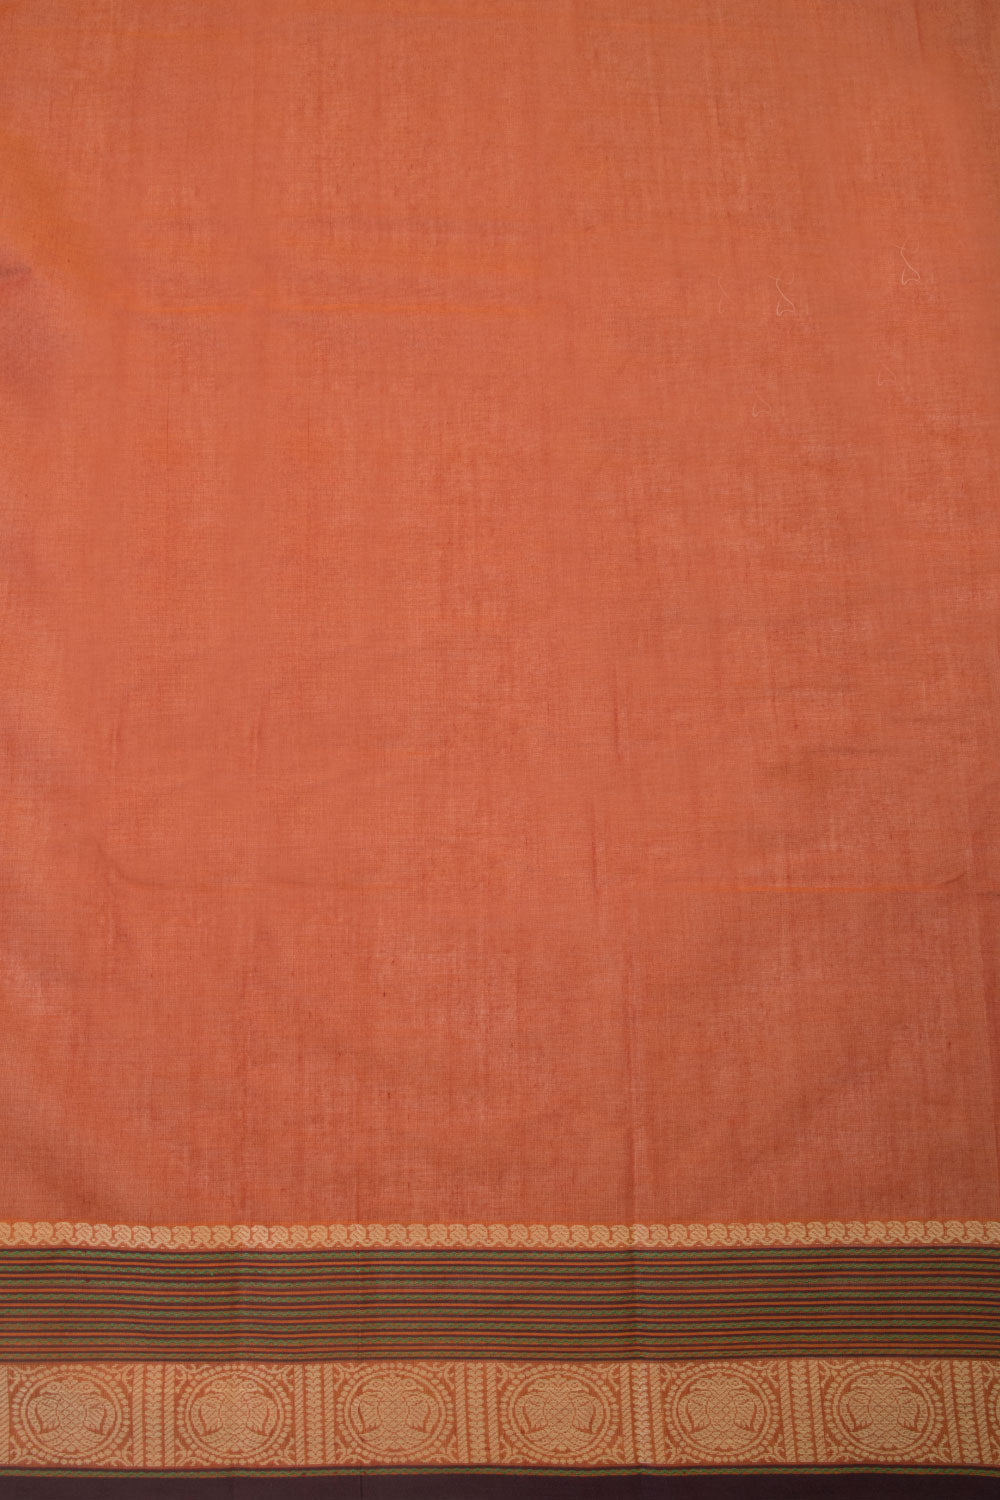 Mahogany Brown Handwoven Kanchi Cotton Saree - Avishya